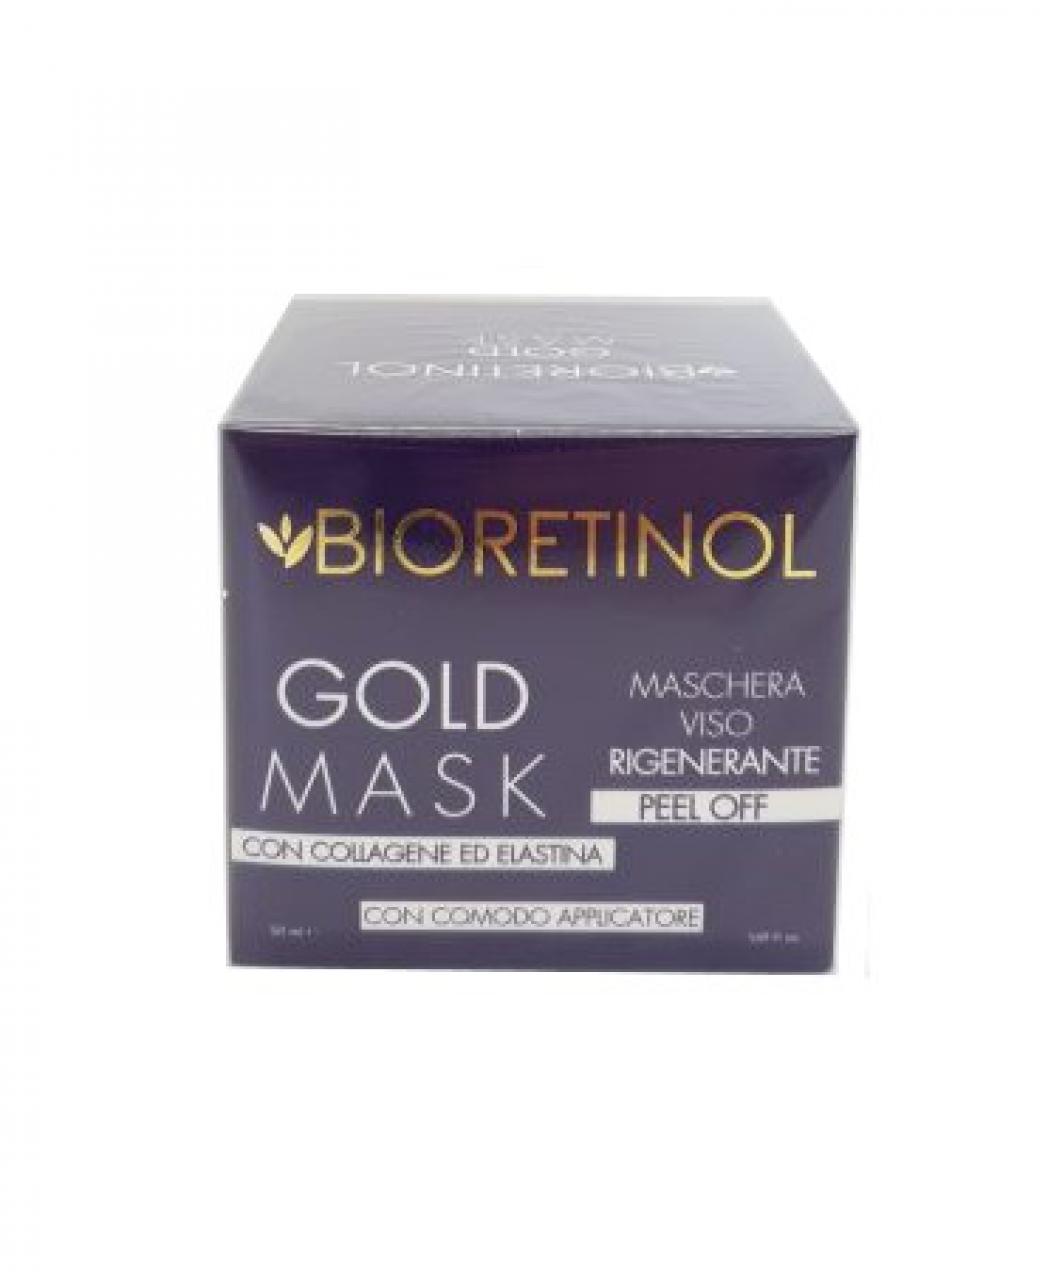 Bioretinol gold mask